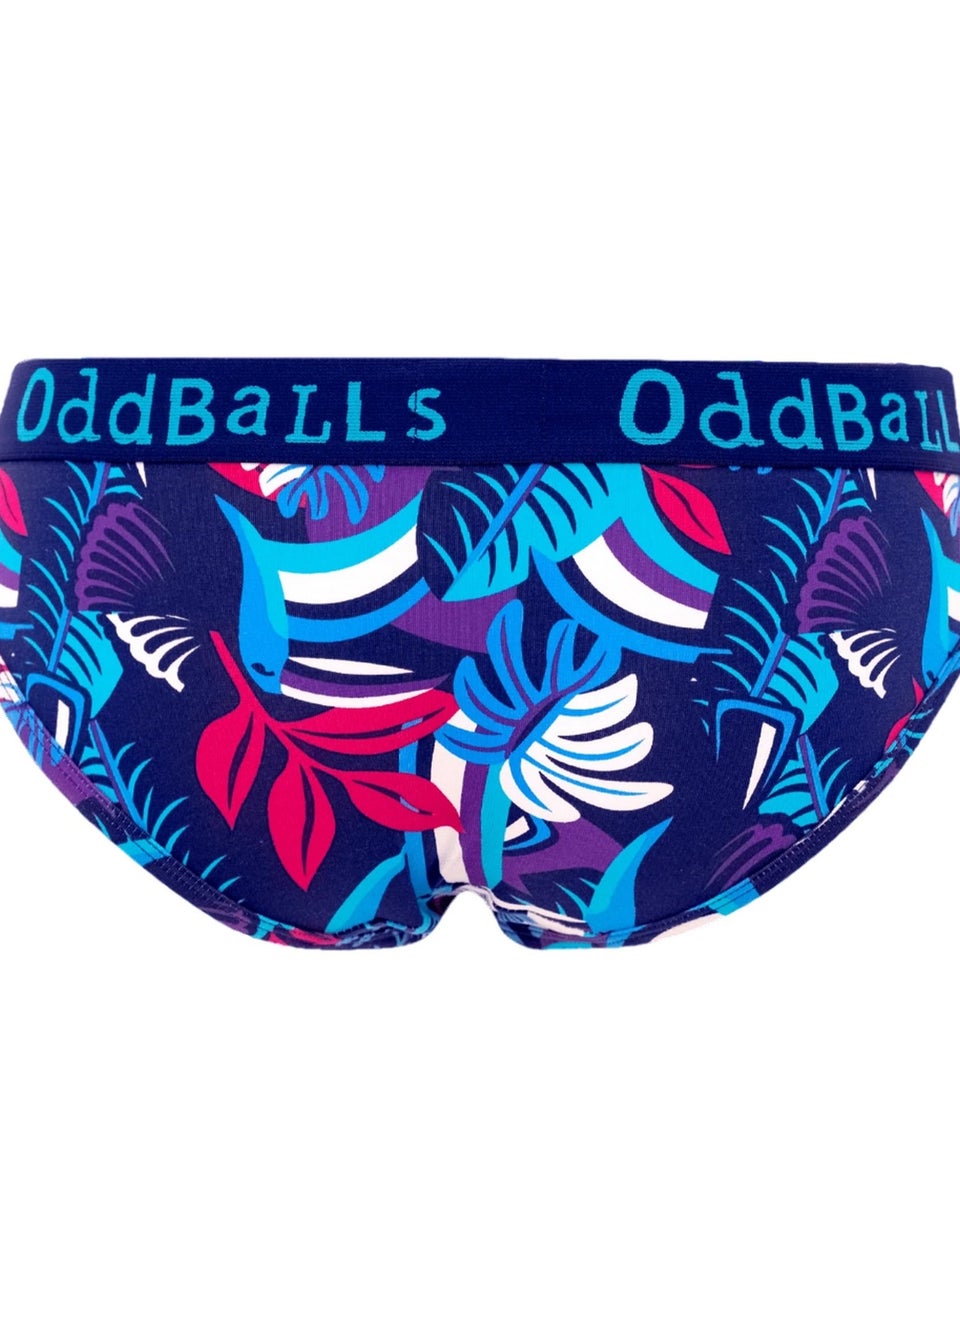 OddBalls Blue Toucan Briefs